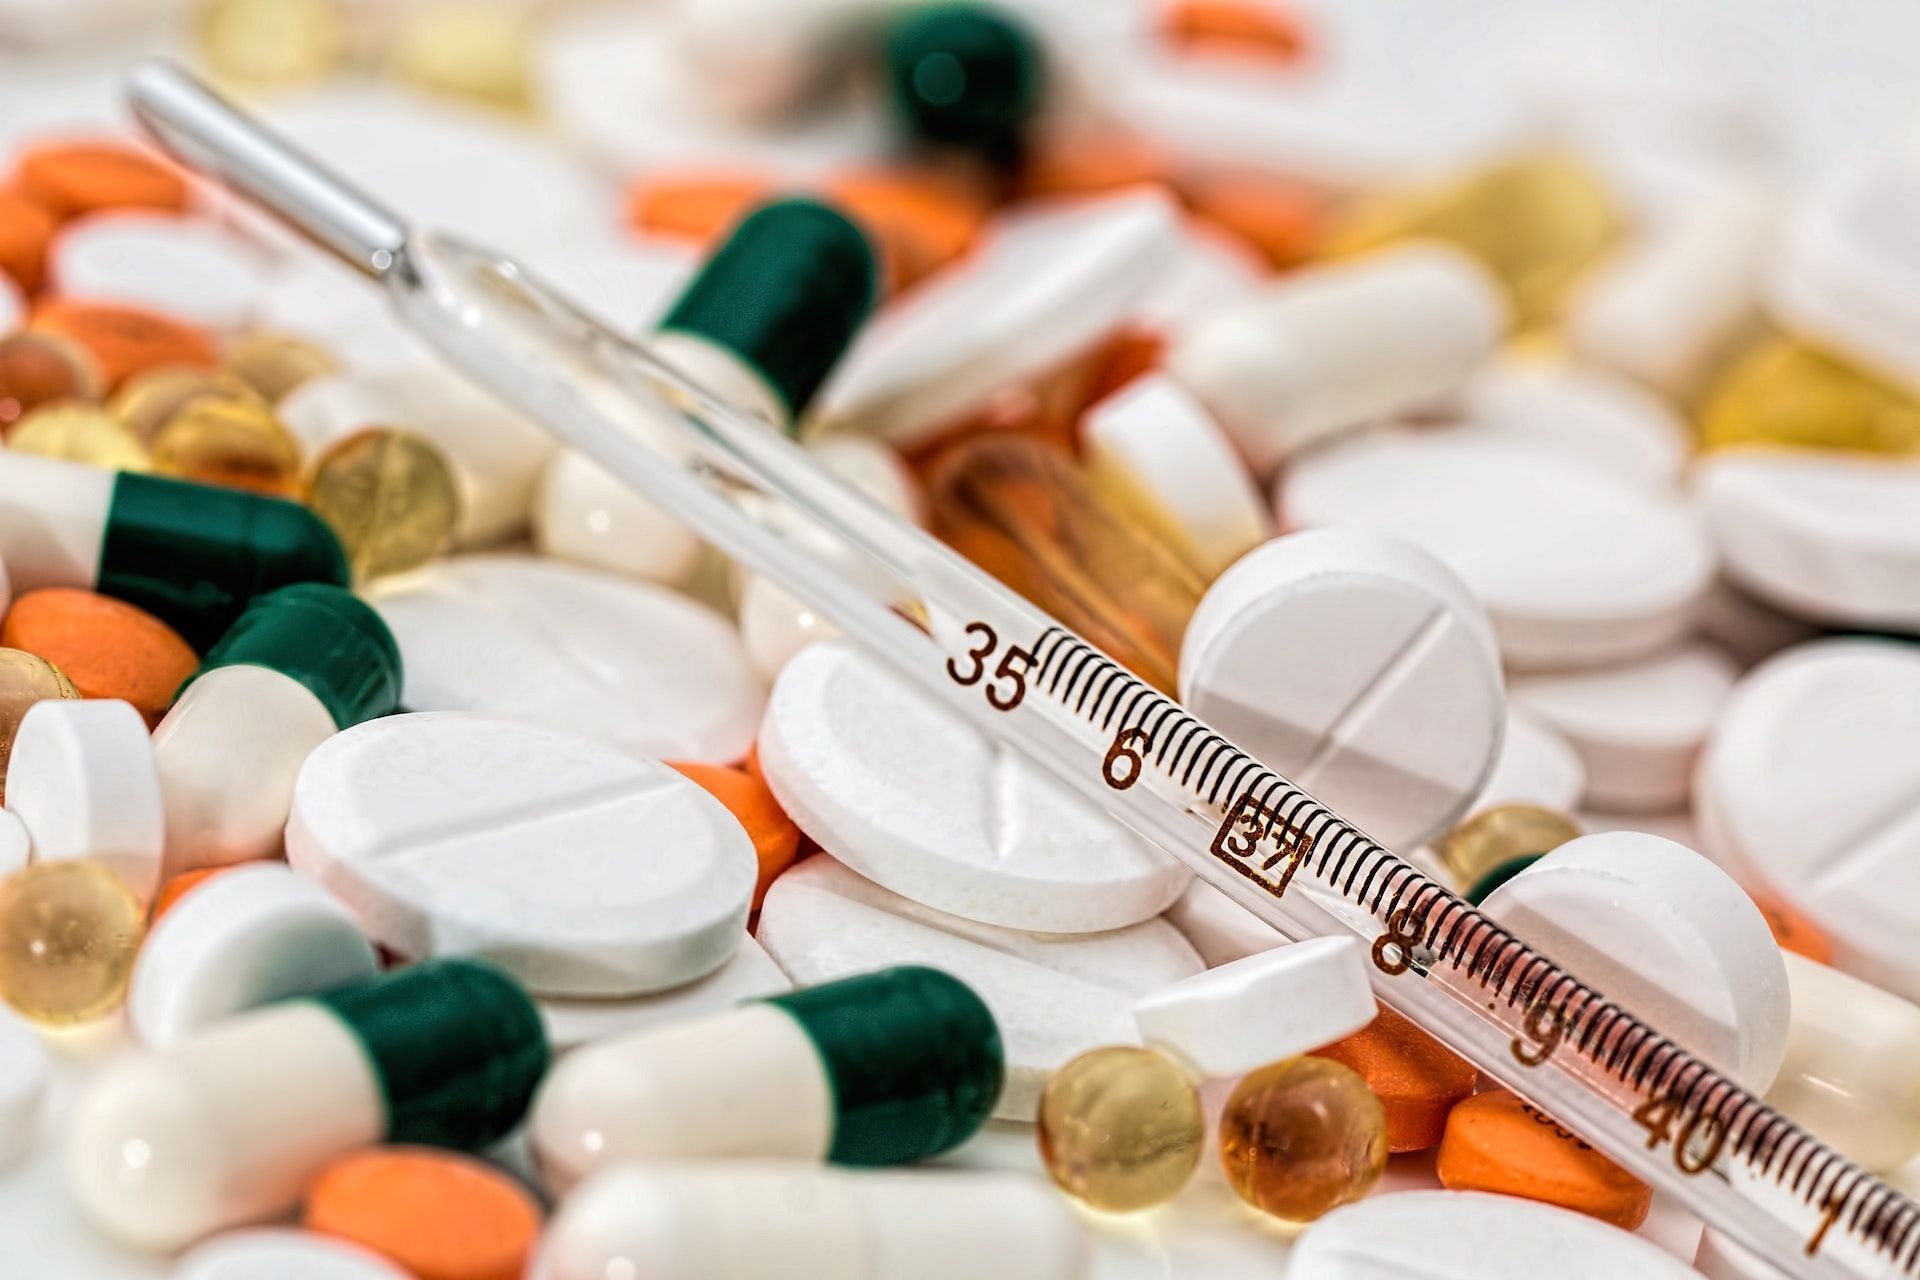 Certain antibiotics can be prescribed by doctors. (Photo via Pexels/Pixabay)